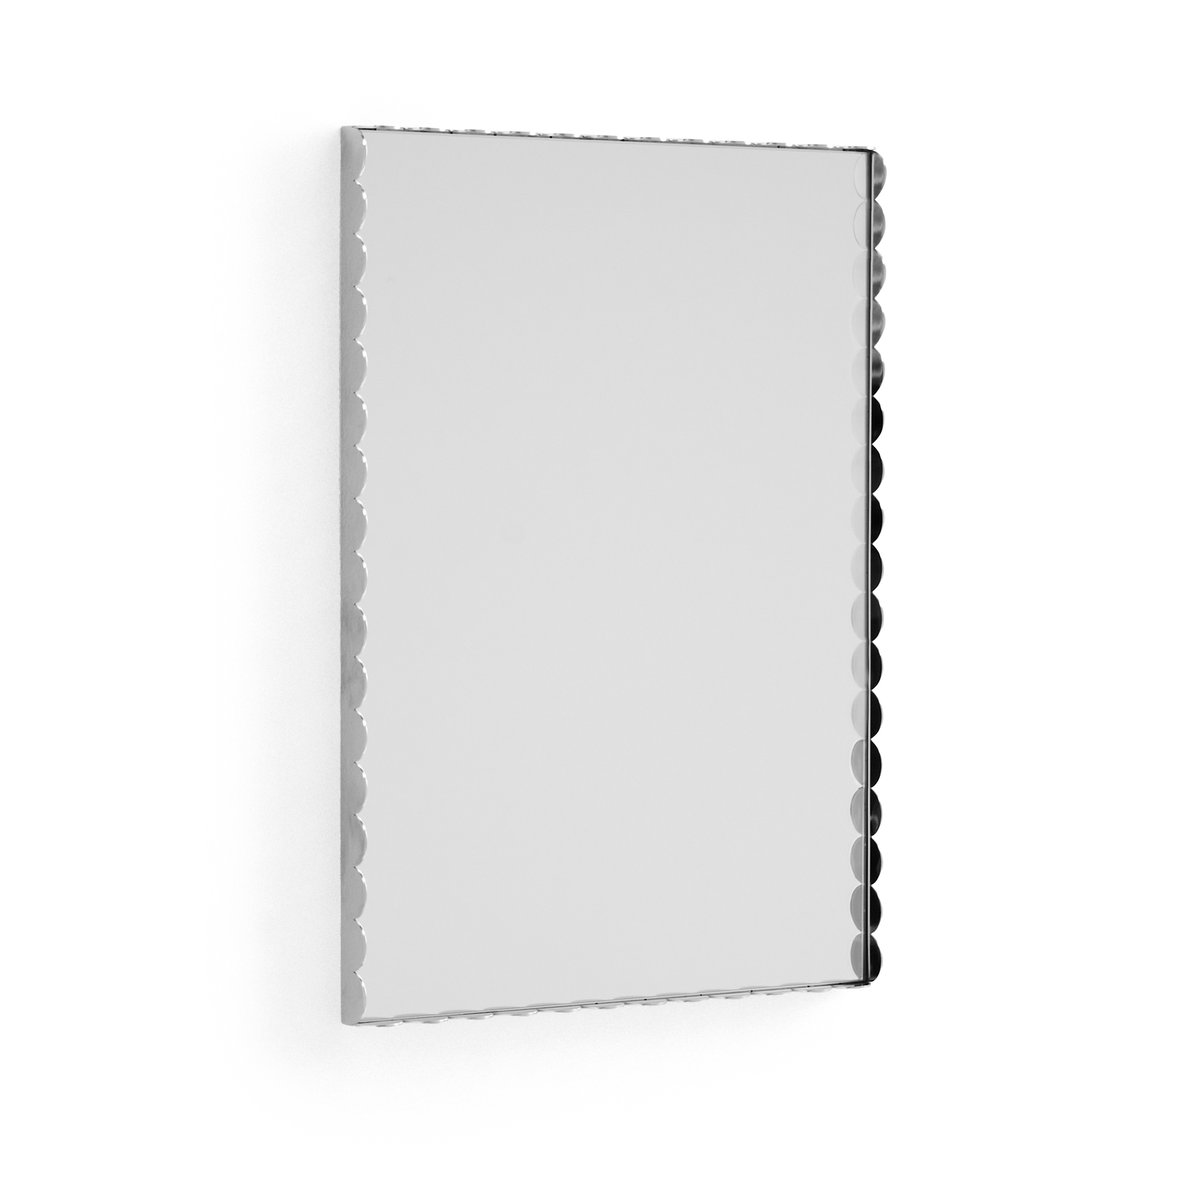 HAY Arcs Mirror Rectangle S mirror 43.5x61.5 cm Stainless steel